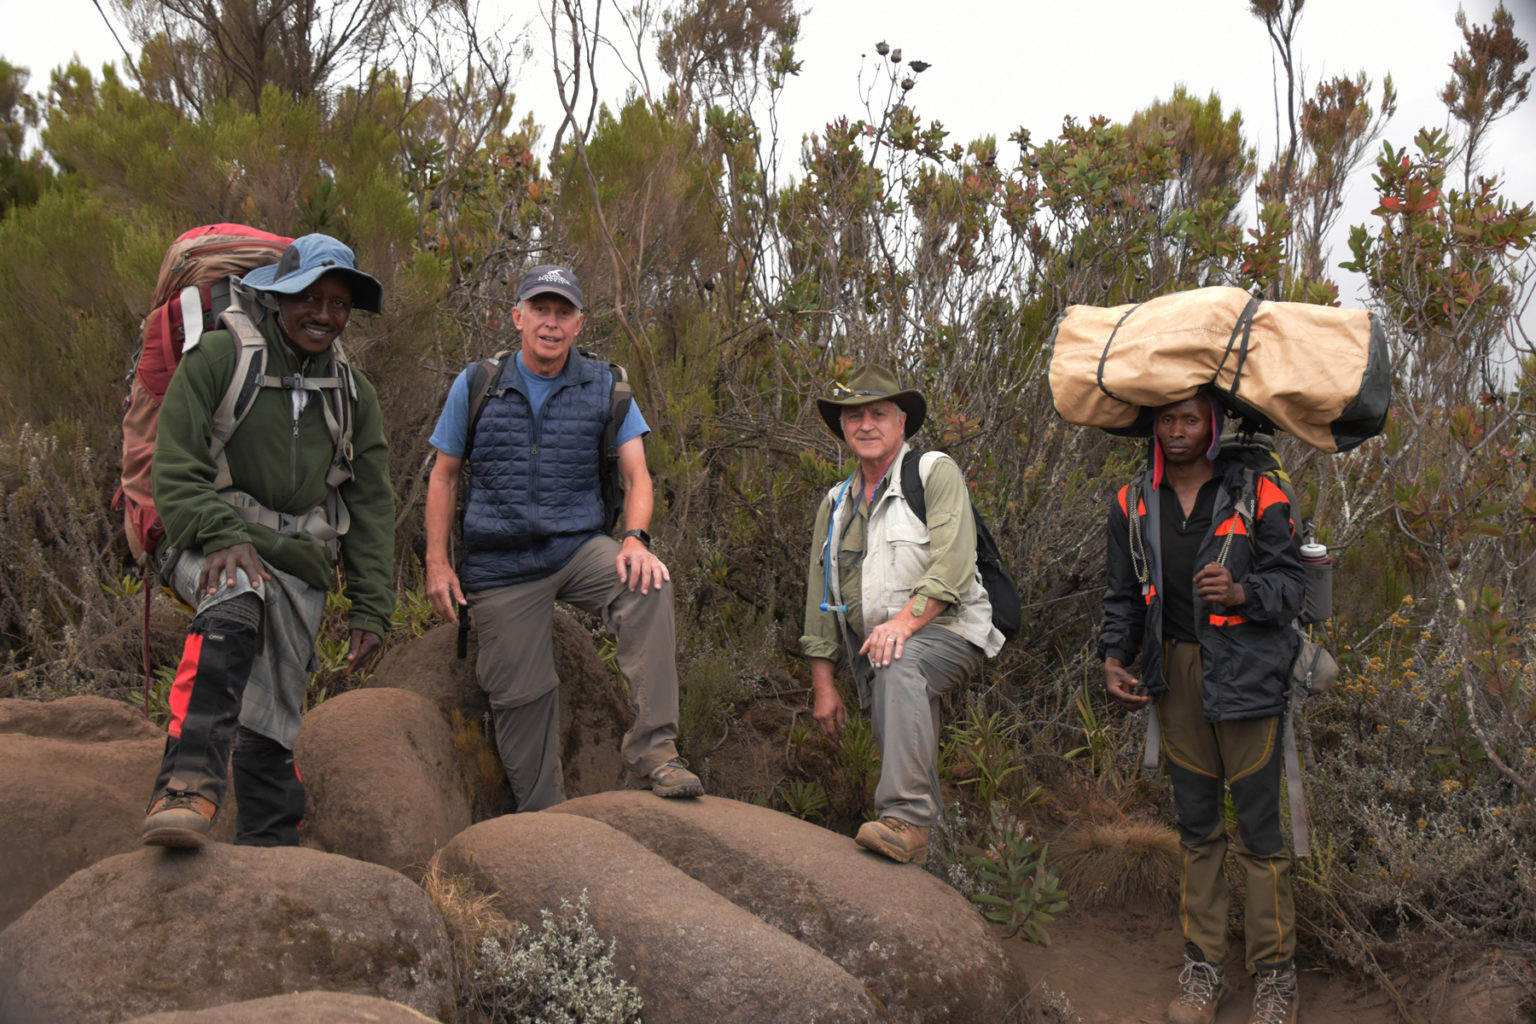 Aaron-Rick-Bill-and-Elisante-Kilimanjaro-NP-101622-0197-low-res-1536x1024-1